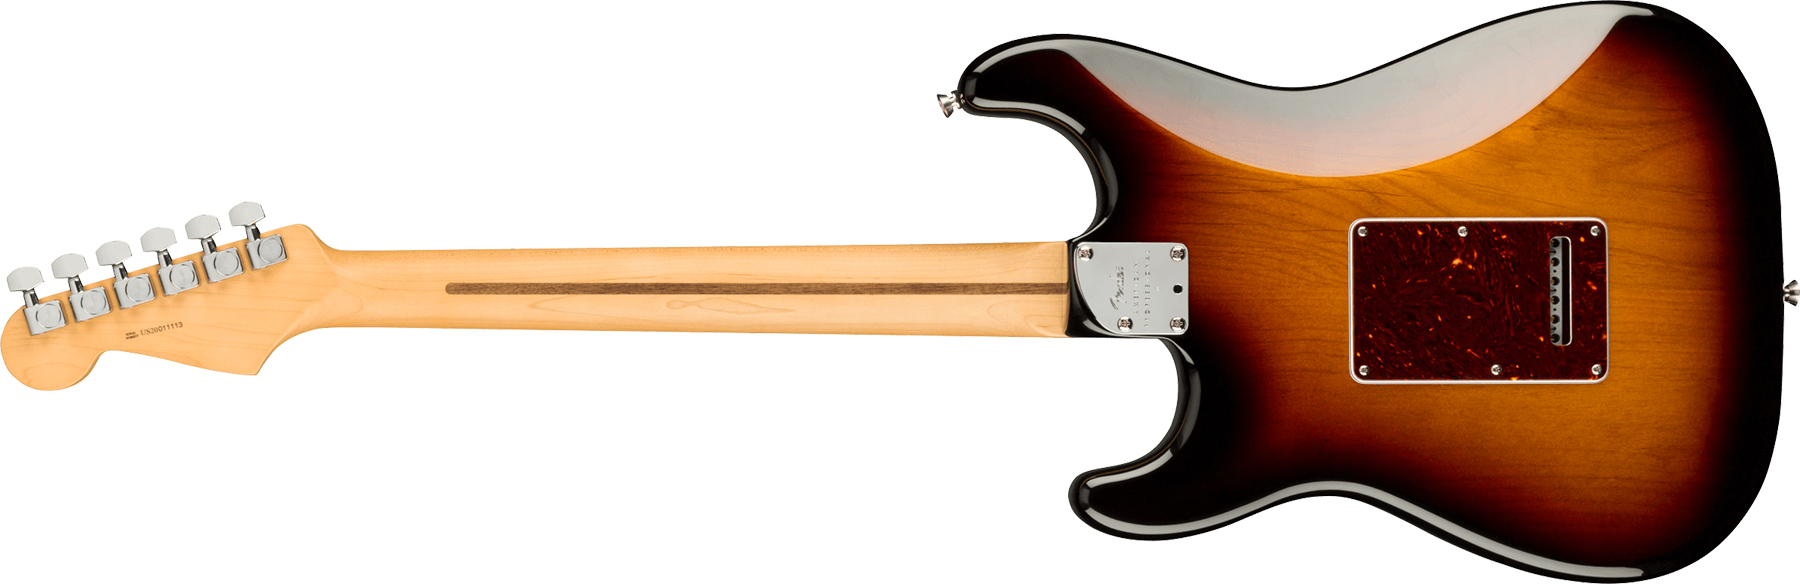 Fender Strat American Professional Ii Usa Mn - 3-color Sunburst - Guitarra eléctrica con forma de str. - Variation 1